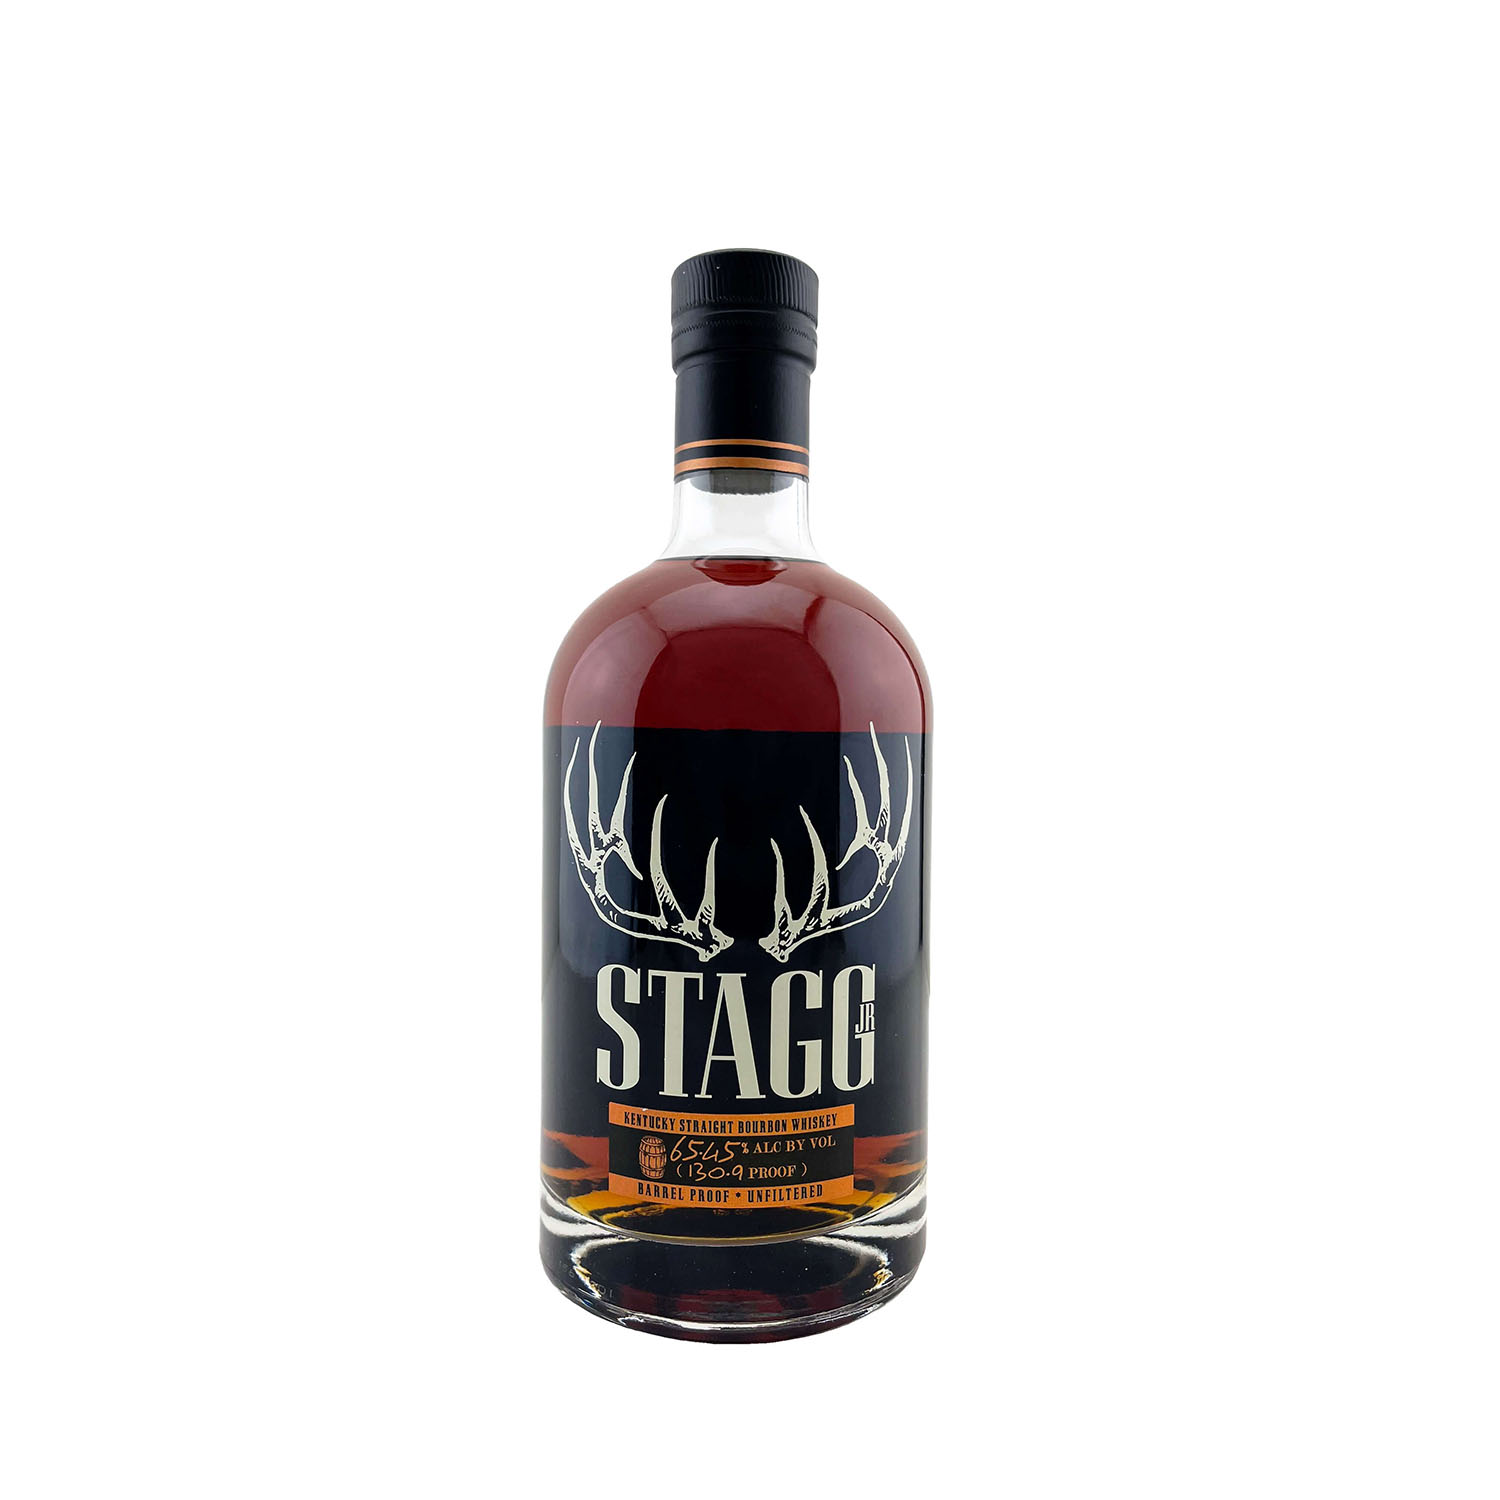 2021 Stagg Jr. Batch #16 Kentucky Straight Bourbon Whiskey, American Whiskey, The Old Barrelhouse